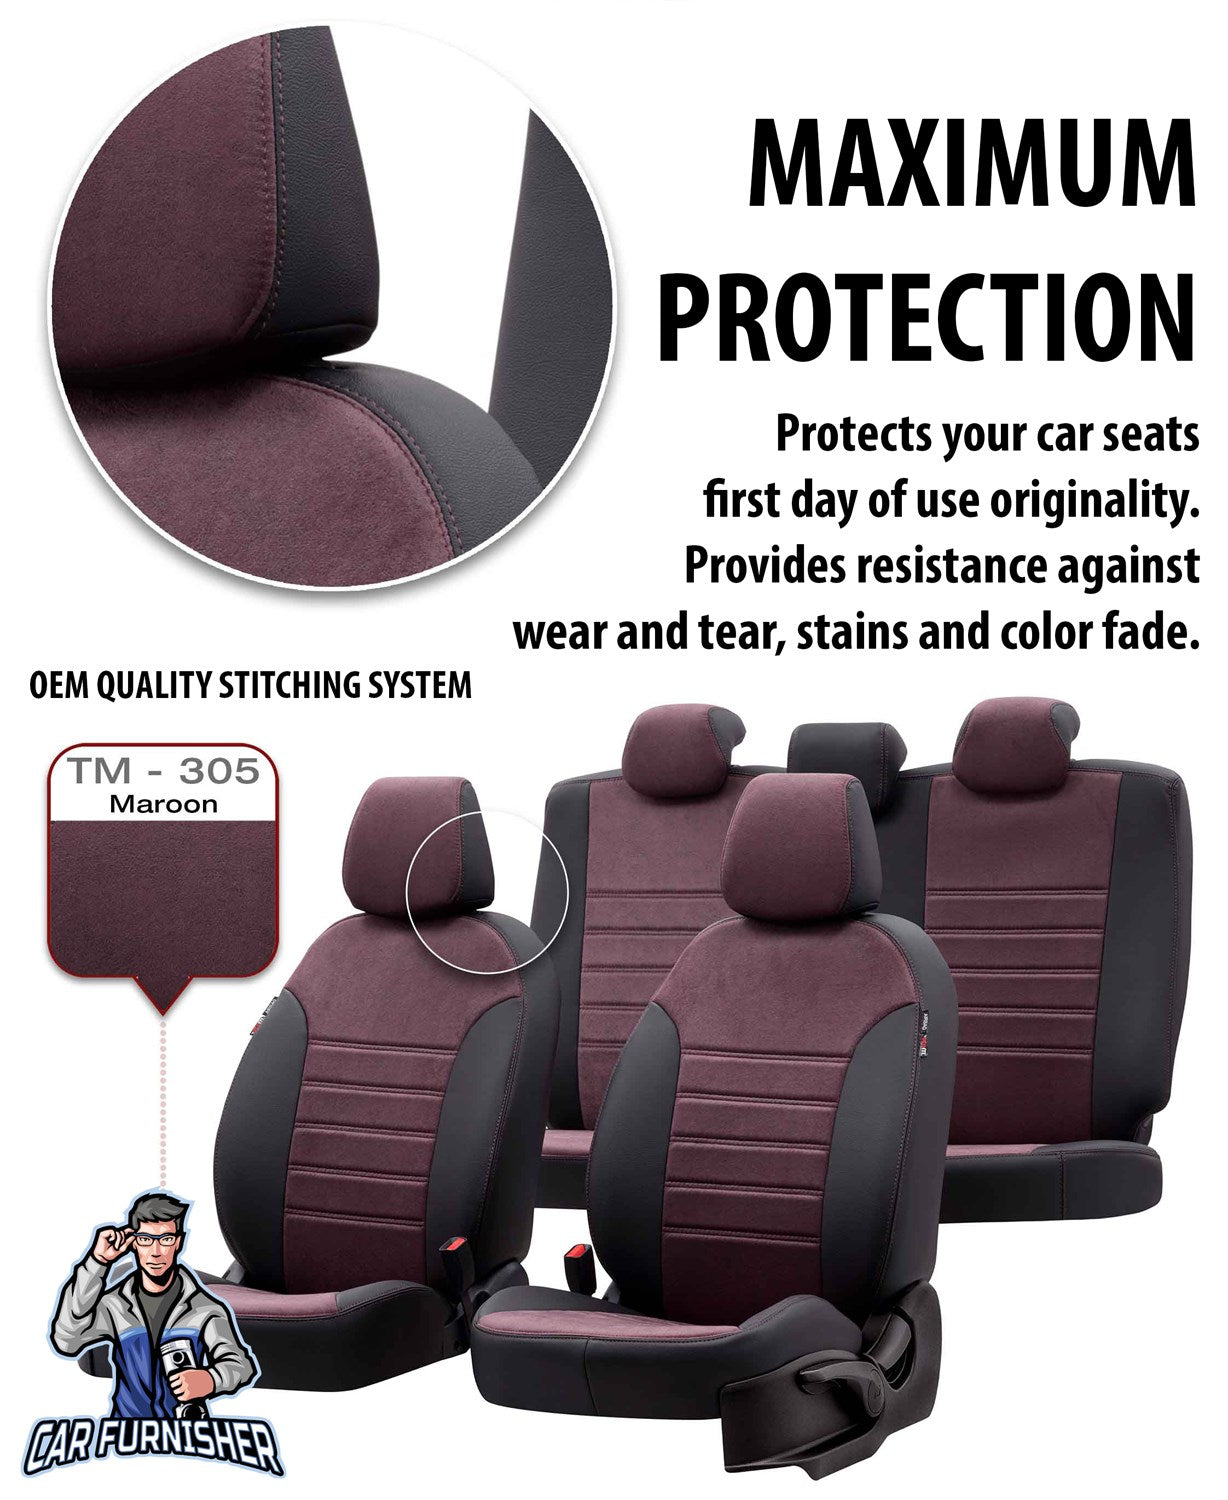 Suzuki S-Cross Car Seat Covers 2013-2018 Milano Design Smoked Leather & Suede Fabric